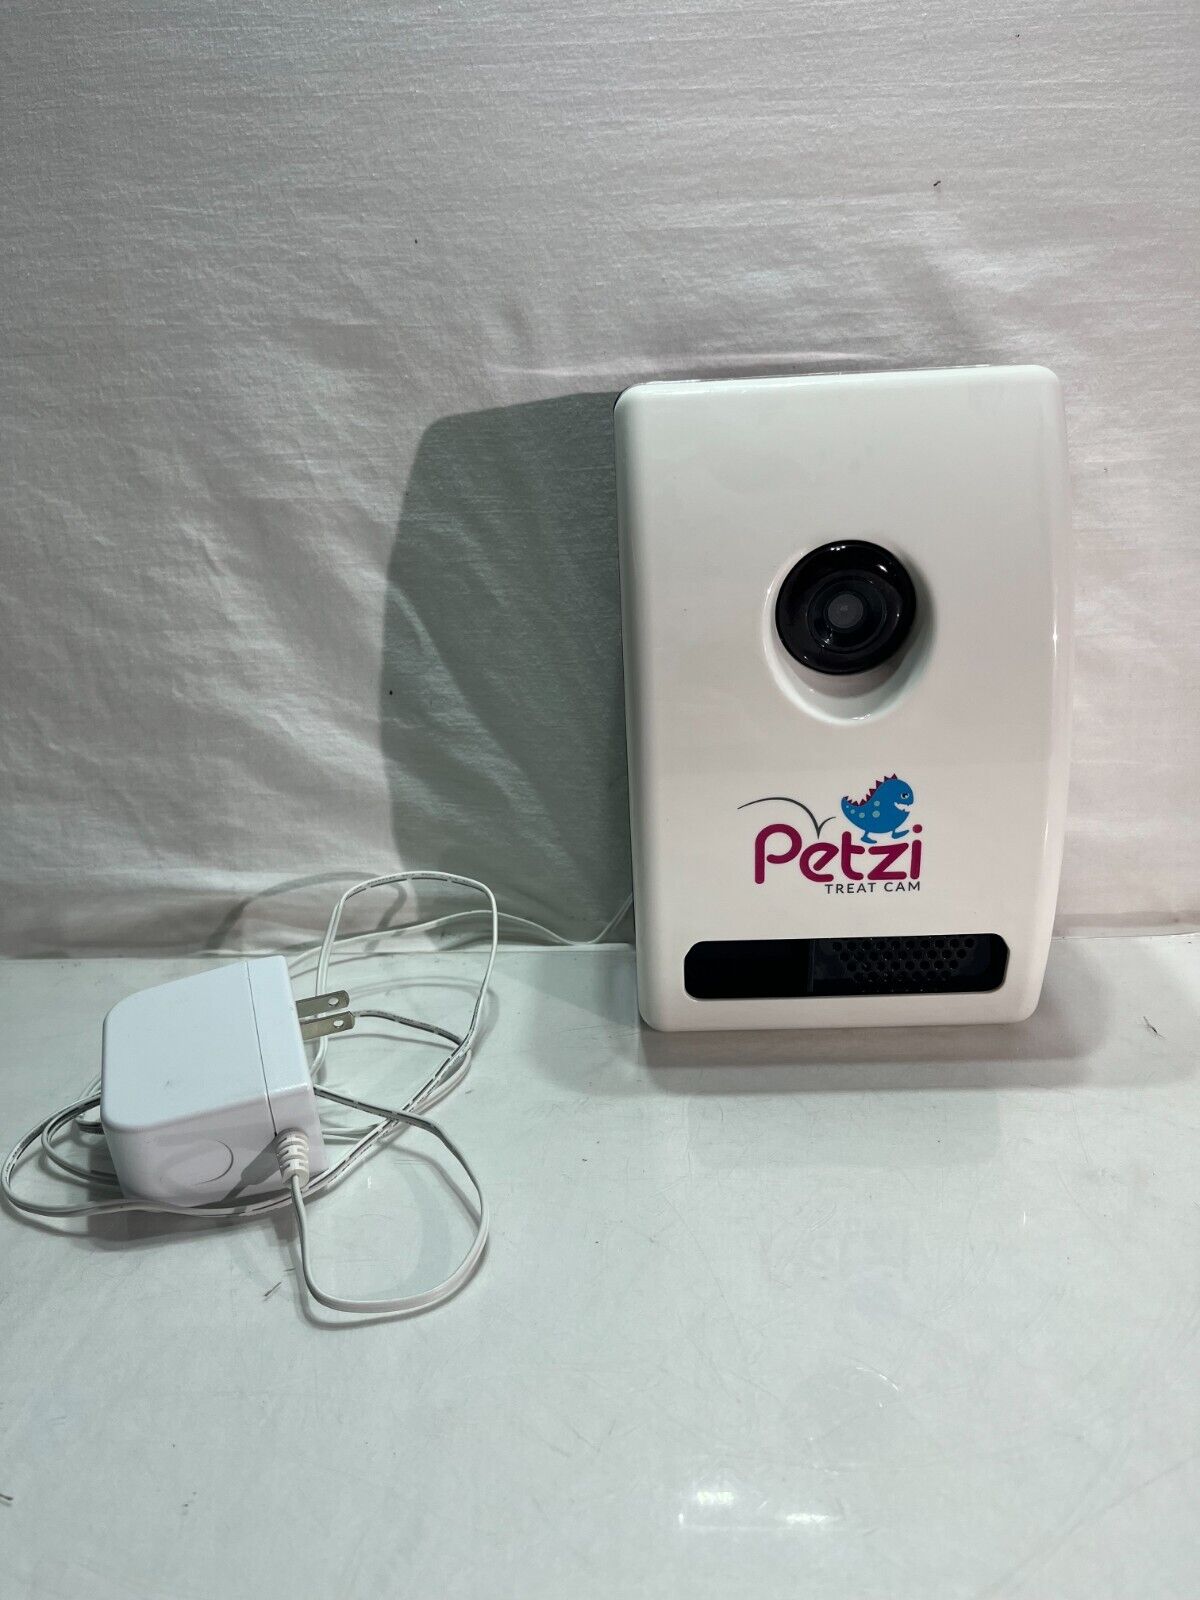 Petzi Treat Cam Wifi Pet Realtime Video Camera Treat Dispenser Used, Tested